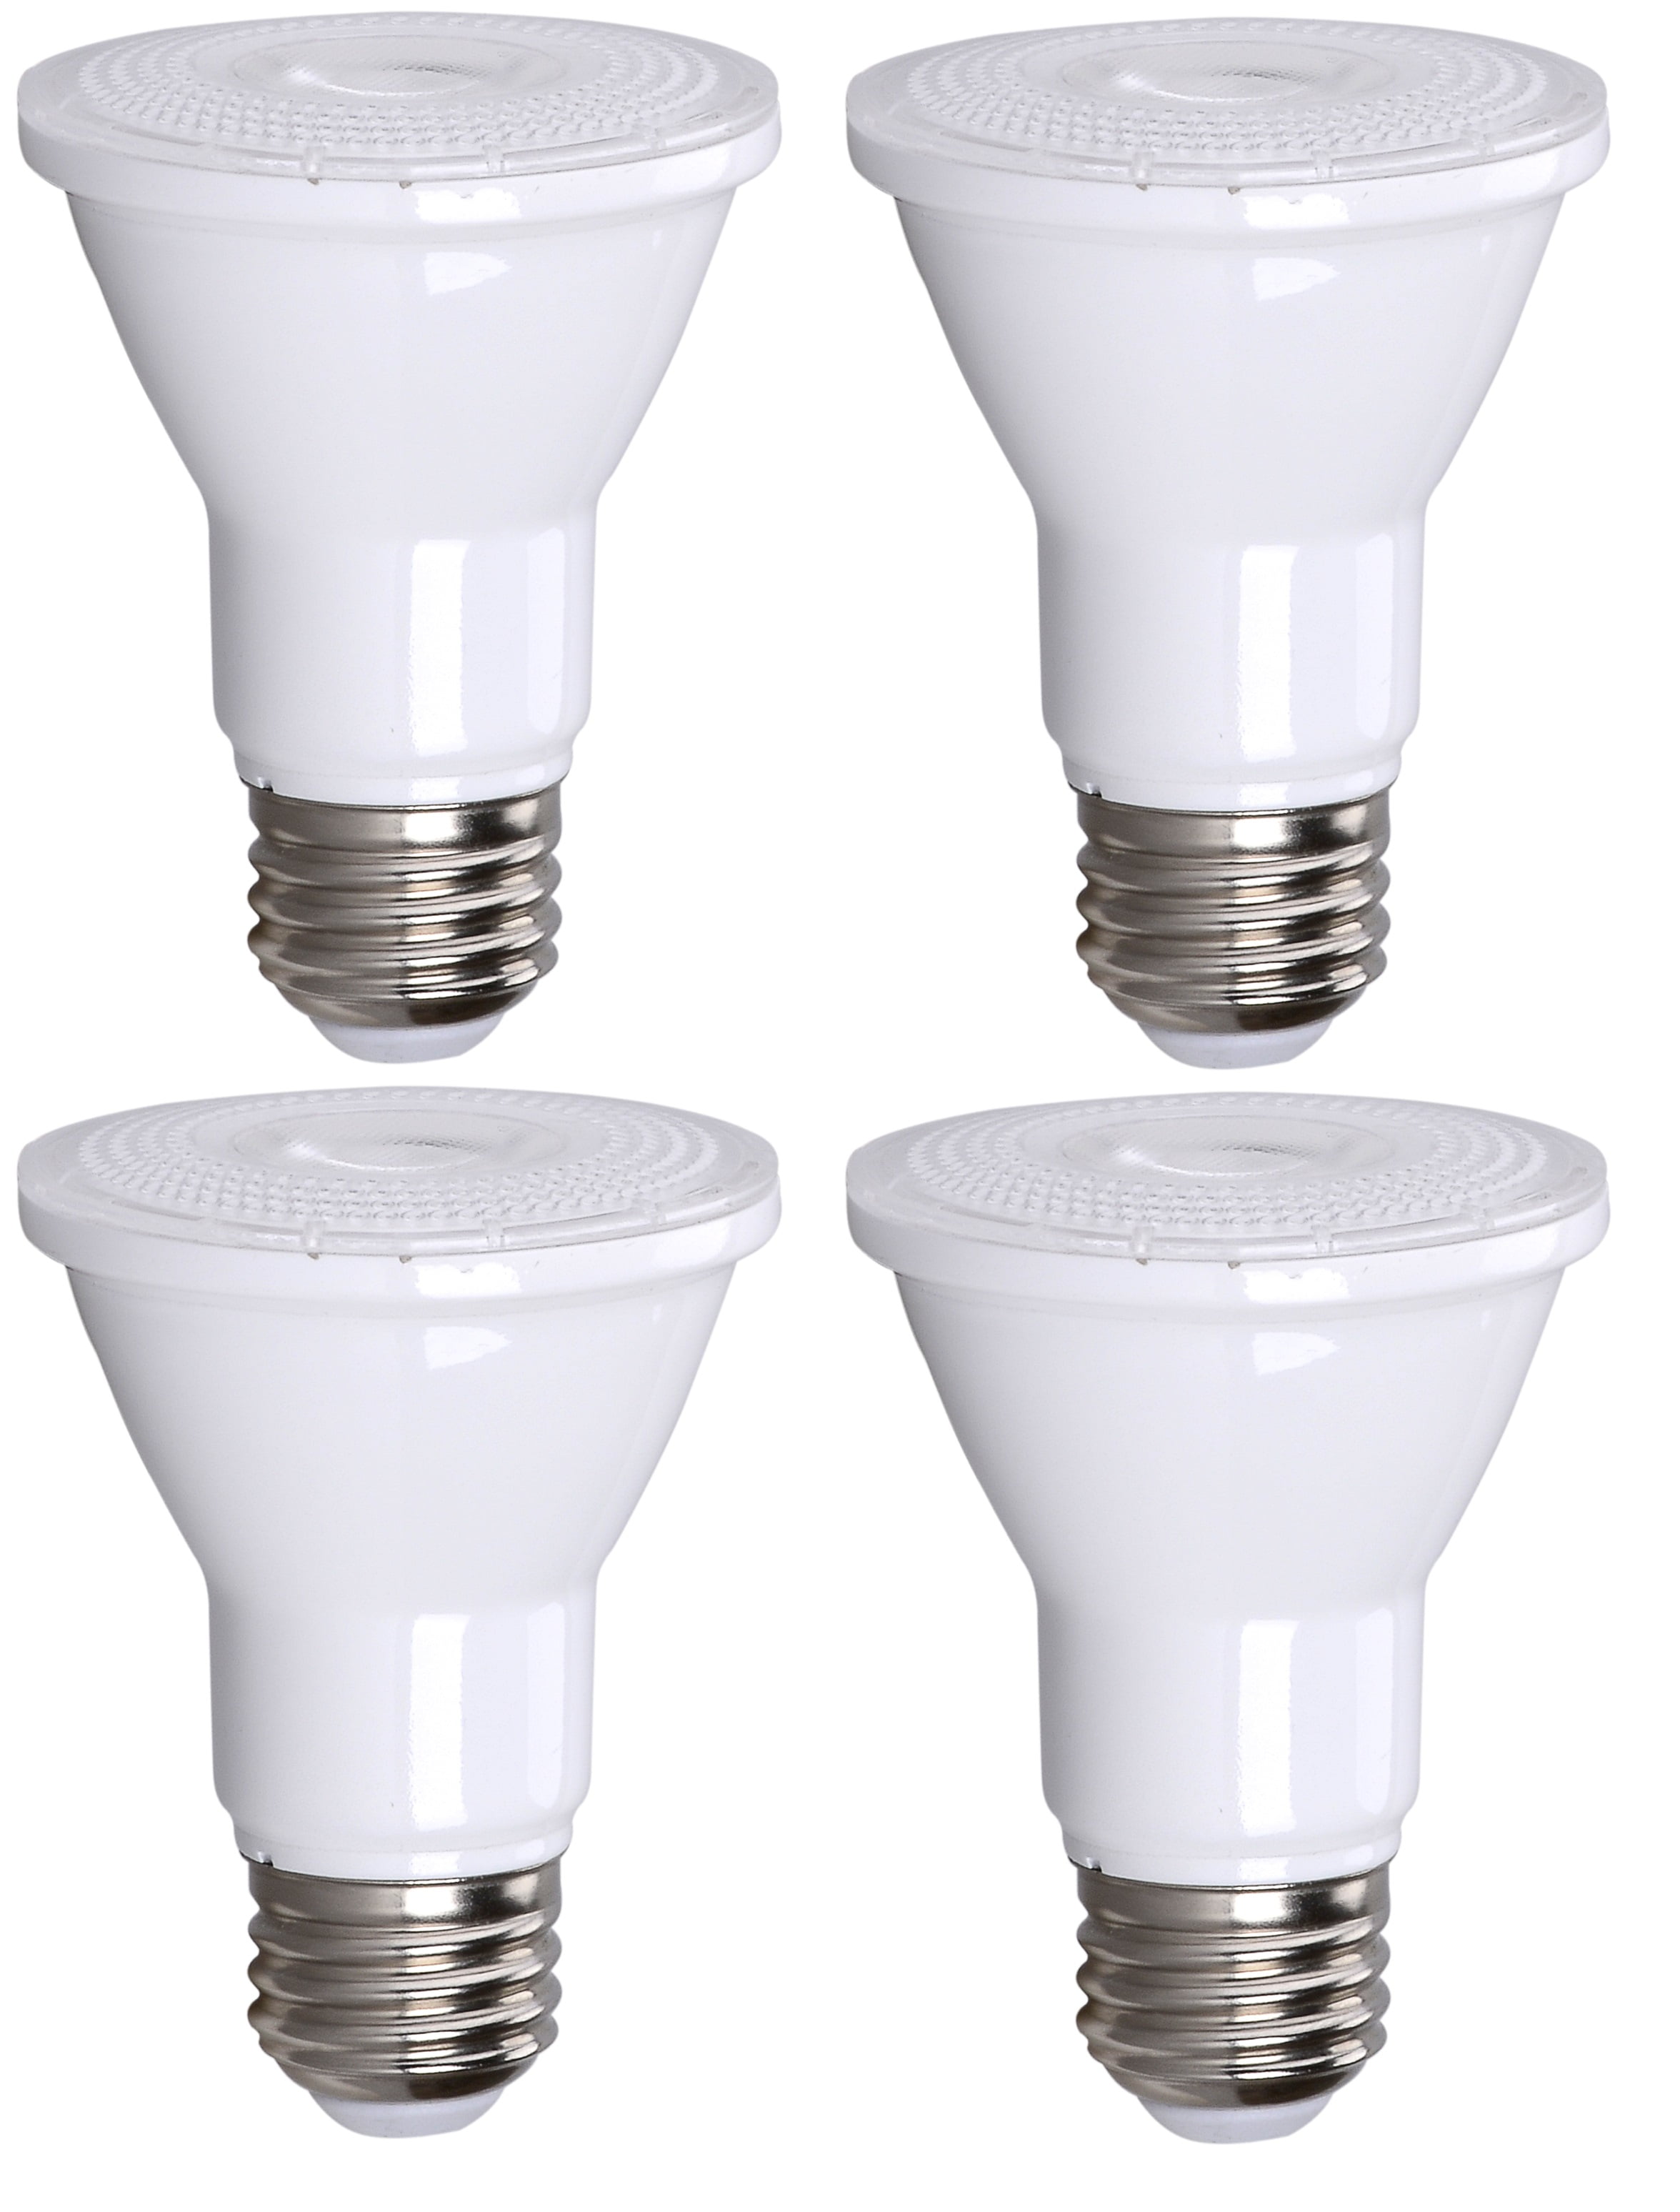 6x 120W Par38 Reflector Spot Light ES Bulb E27 Lamp Decorative Display Enhancer 